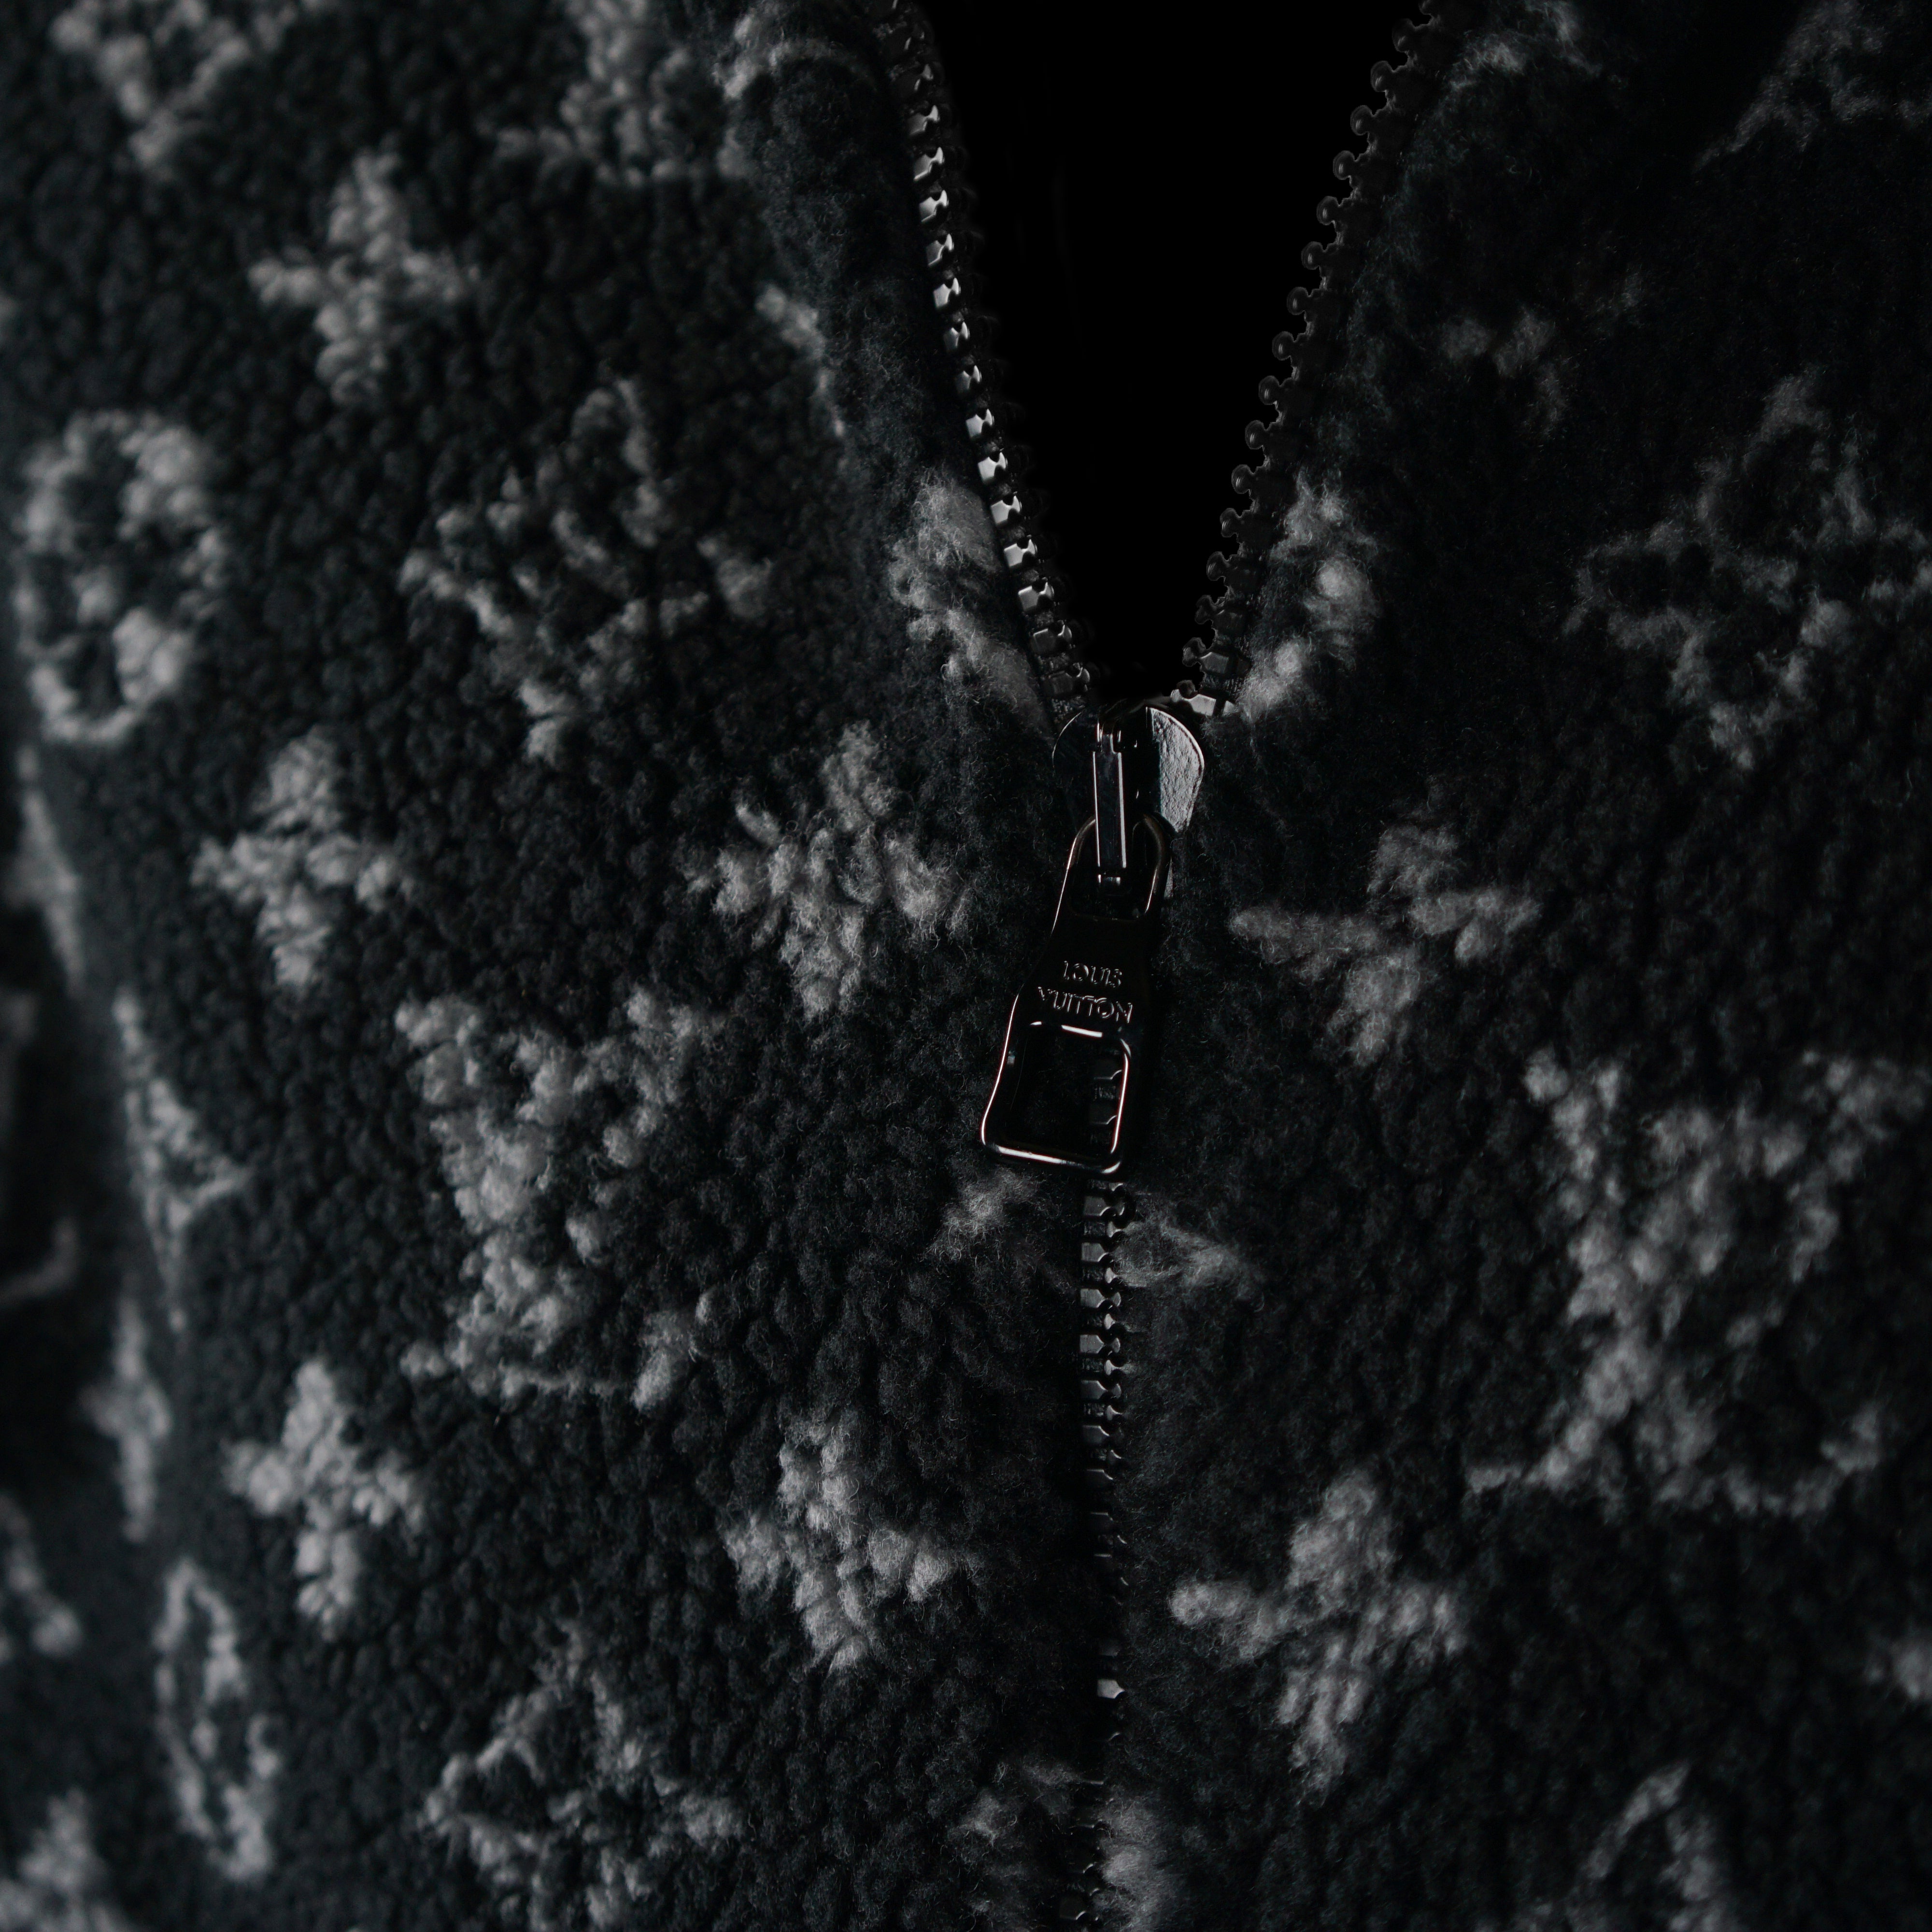 Monogram Jacquard Fleece Zip-Through Jacket XL